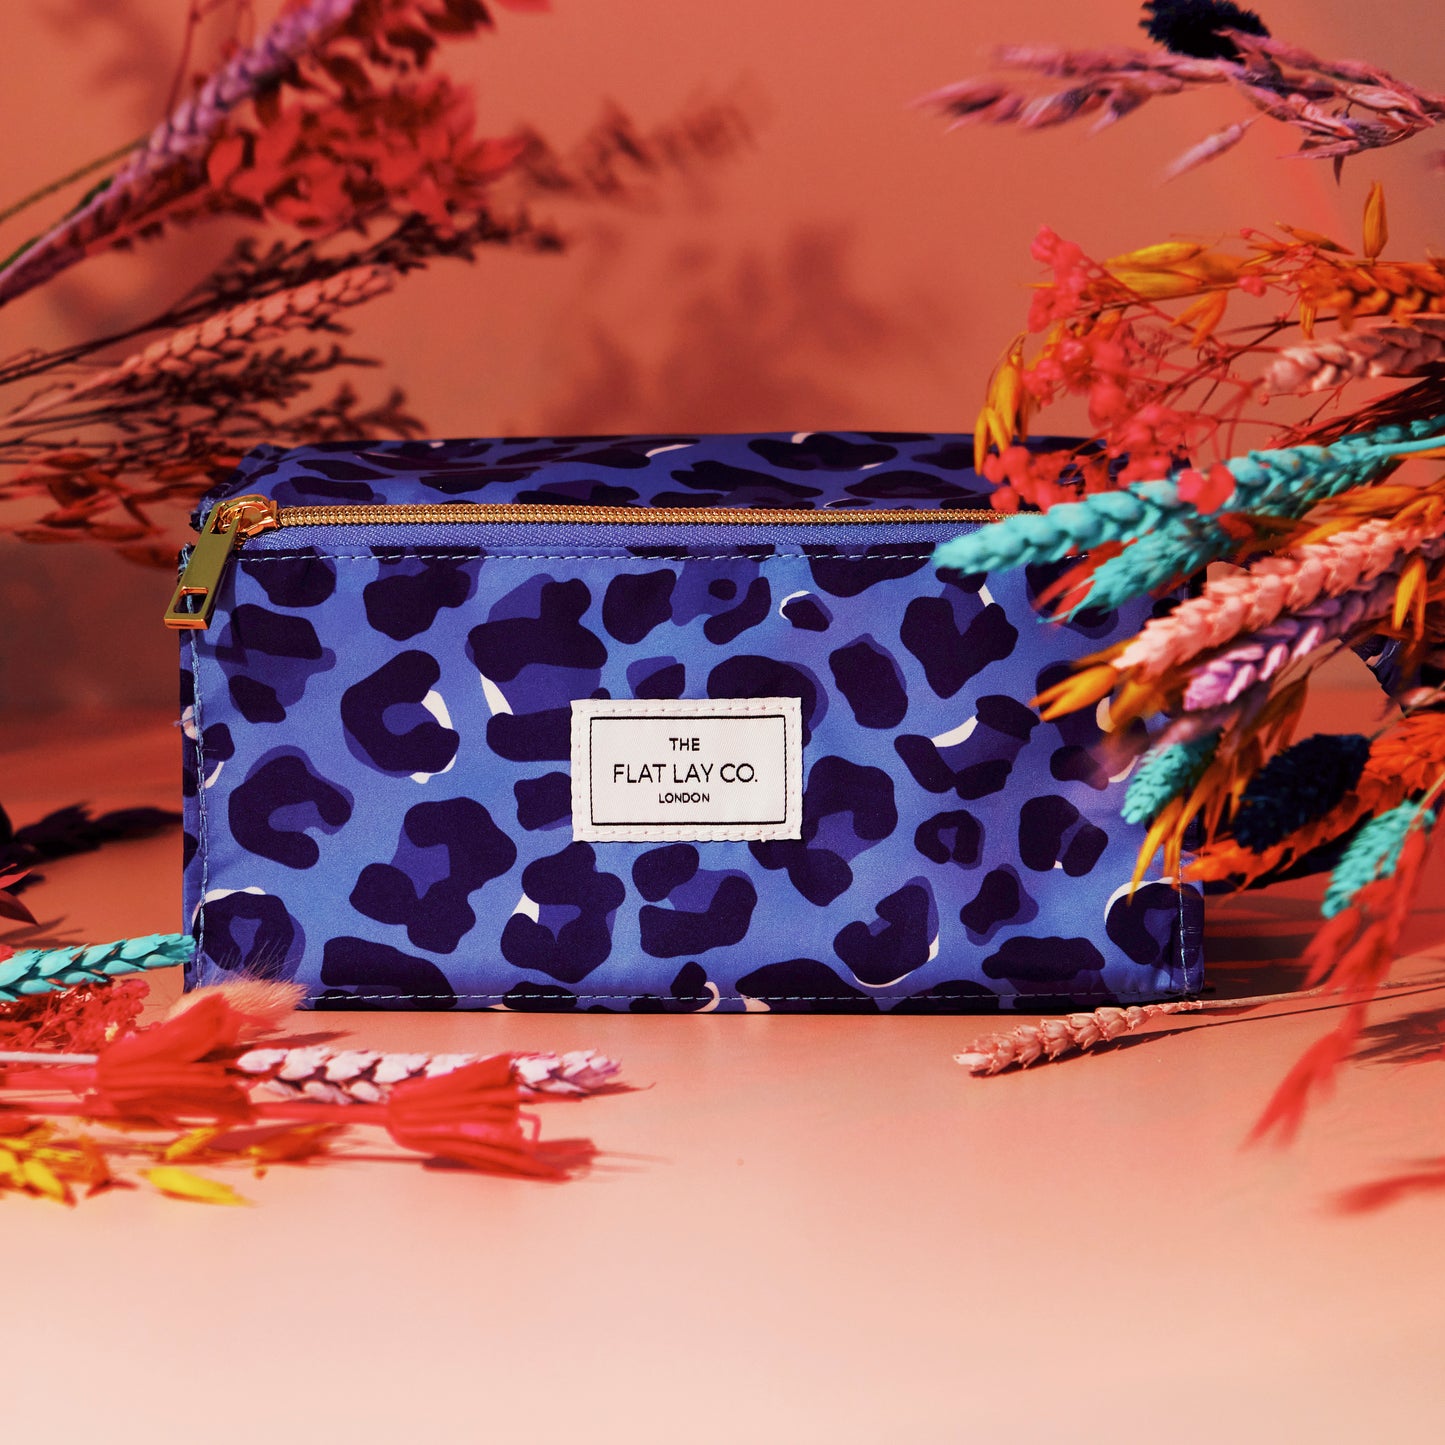 Flat Lay Makeup Box Bag - Blue Leopard